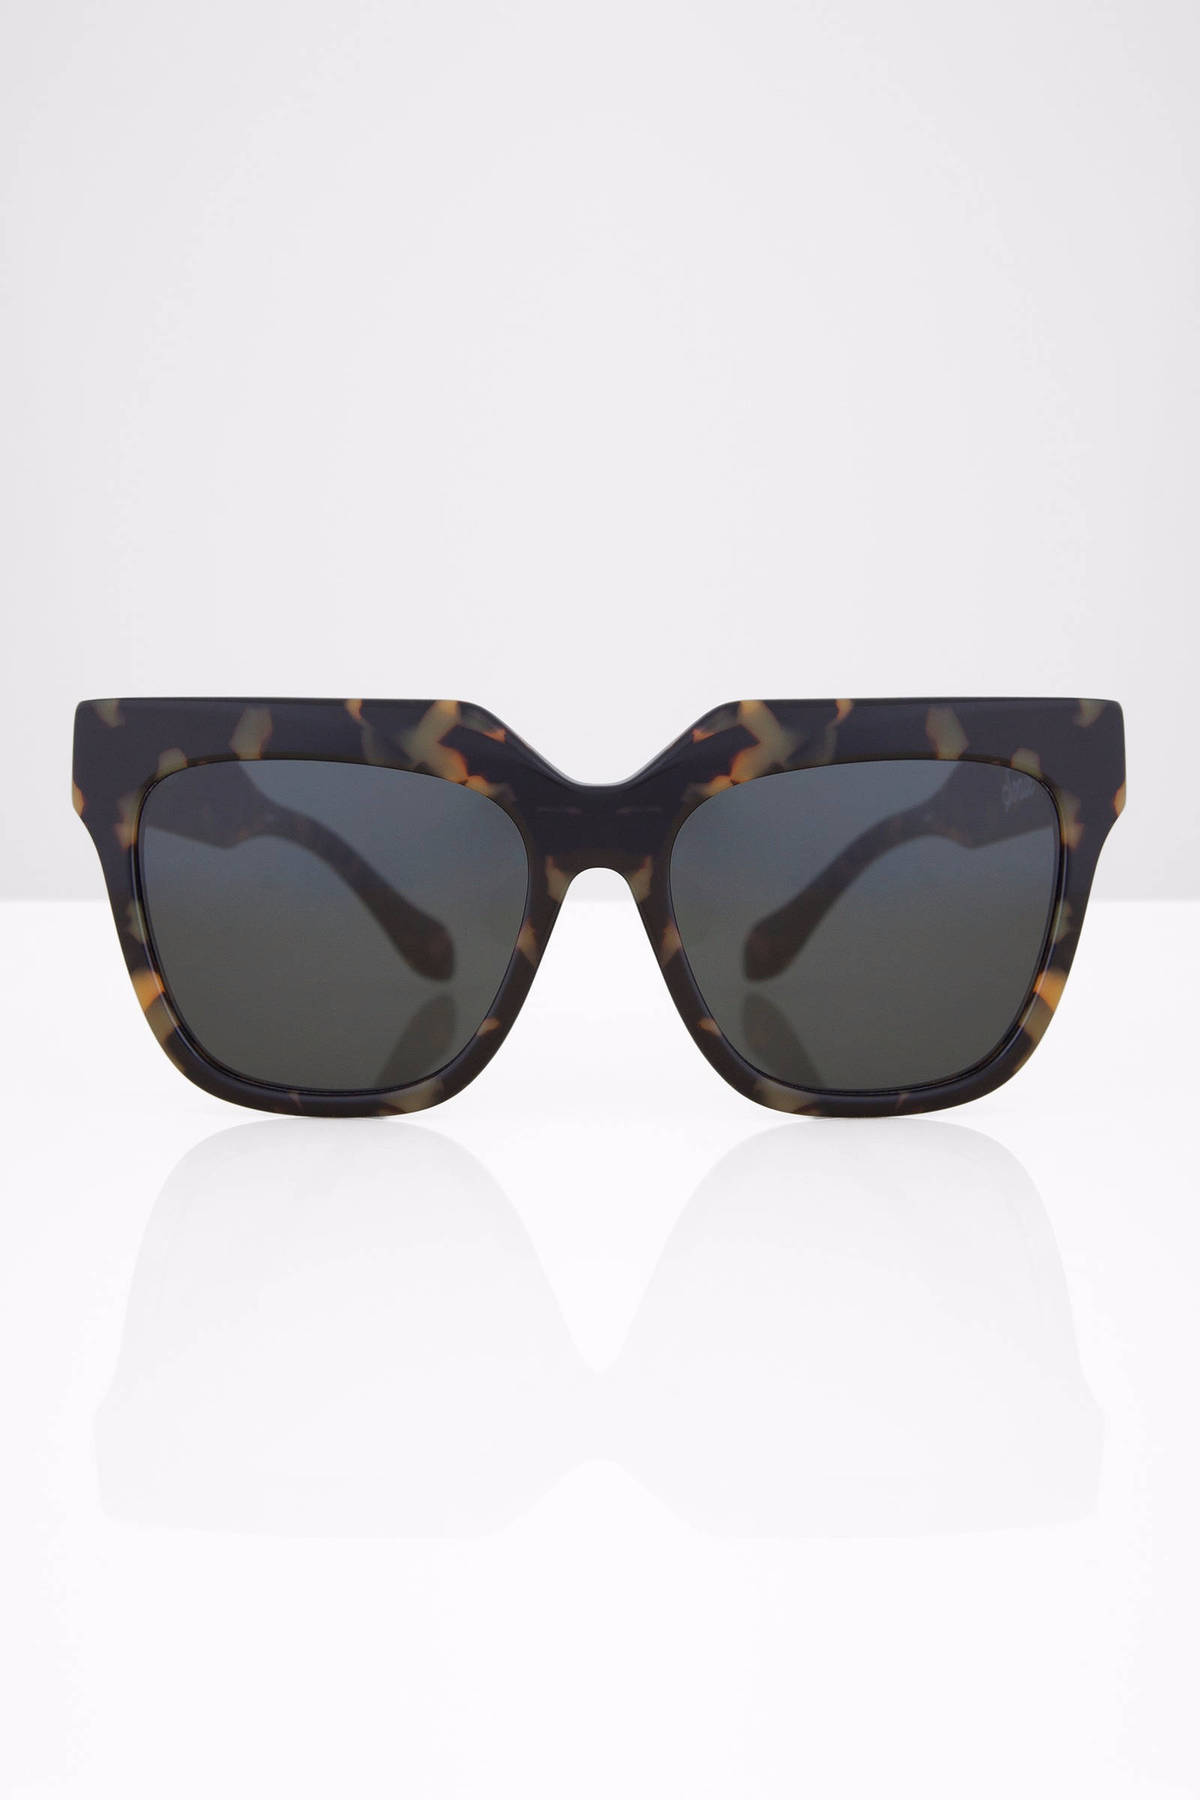 Avalon Sunglasses in Tortoise - $120 | Tobi US